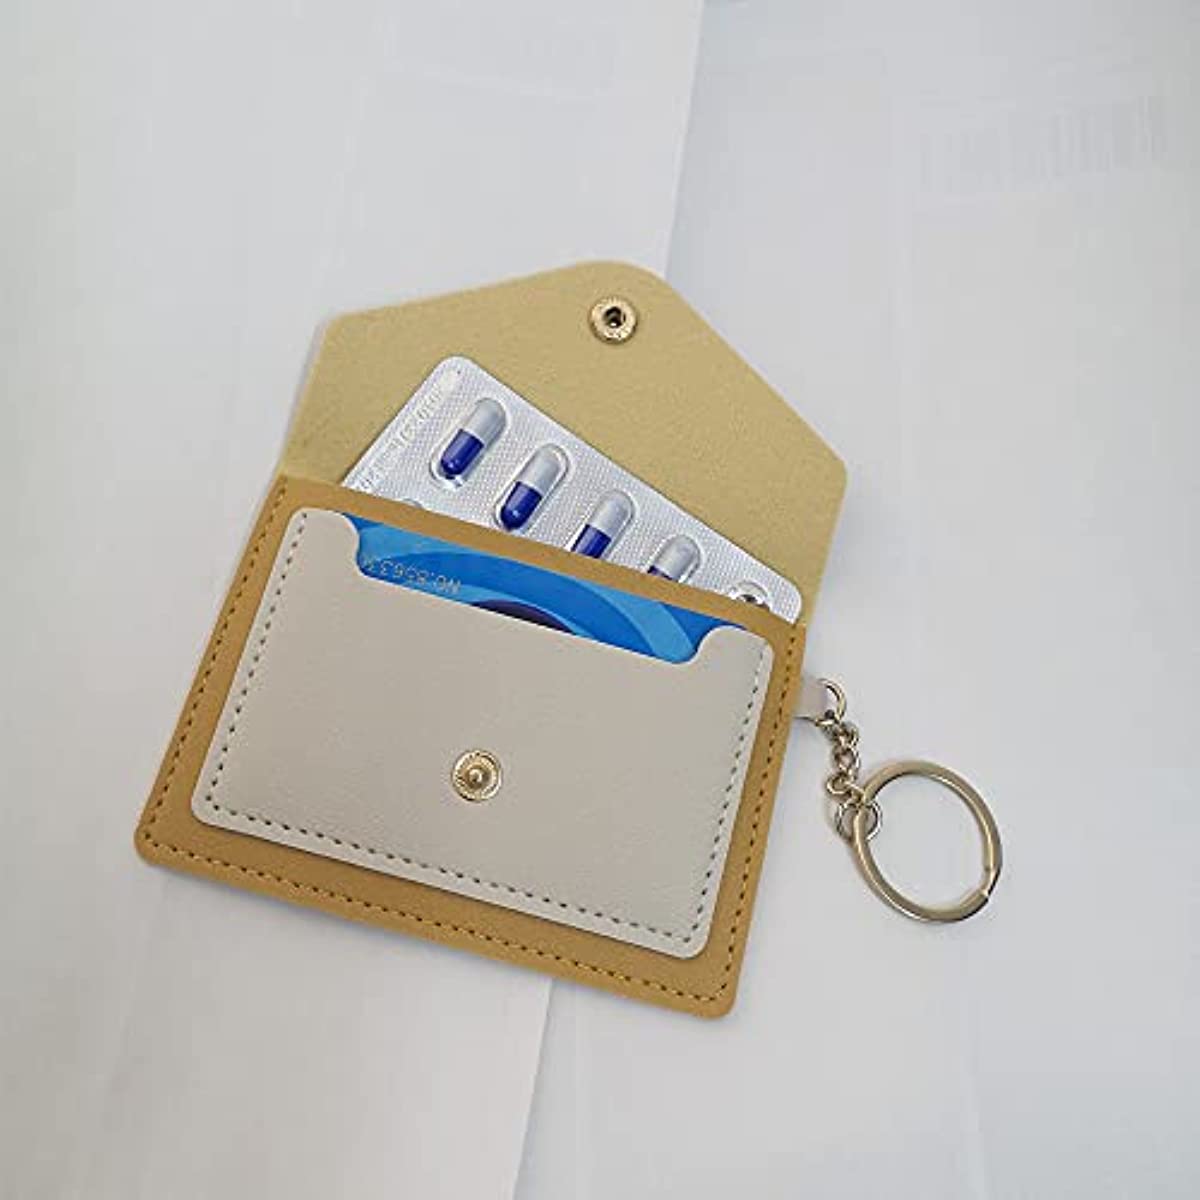 STERCULIA Birth Control Pill Case/Wallet PU Leather Medicine Holder Keychain Envelope Purse(Yellow)